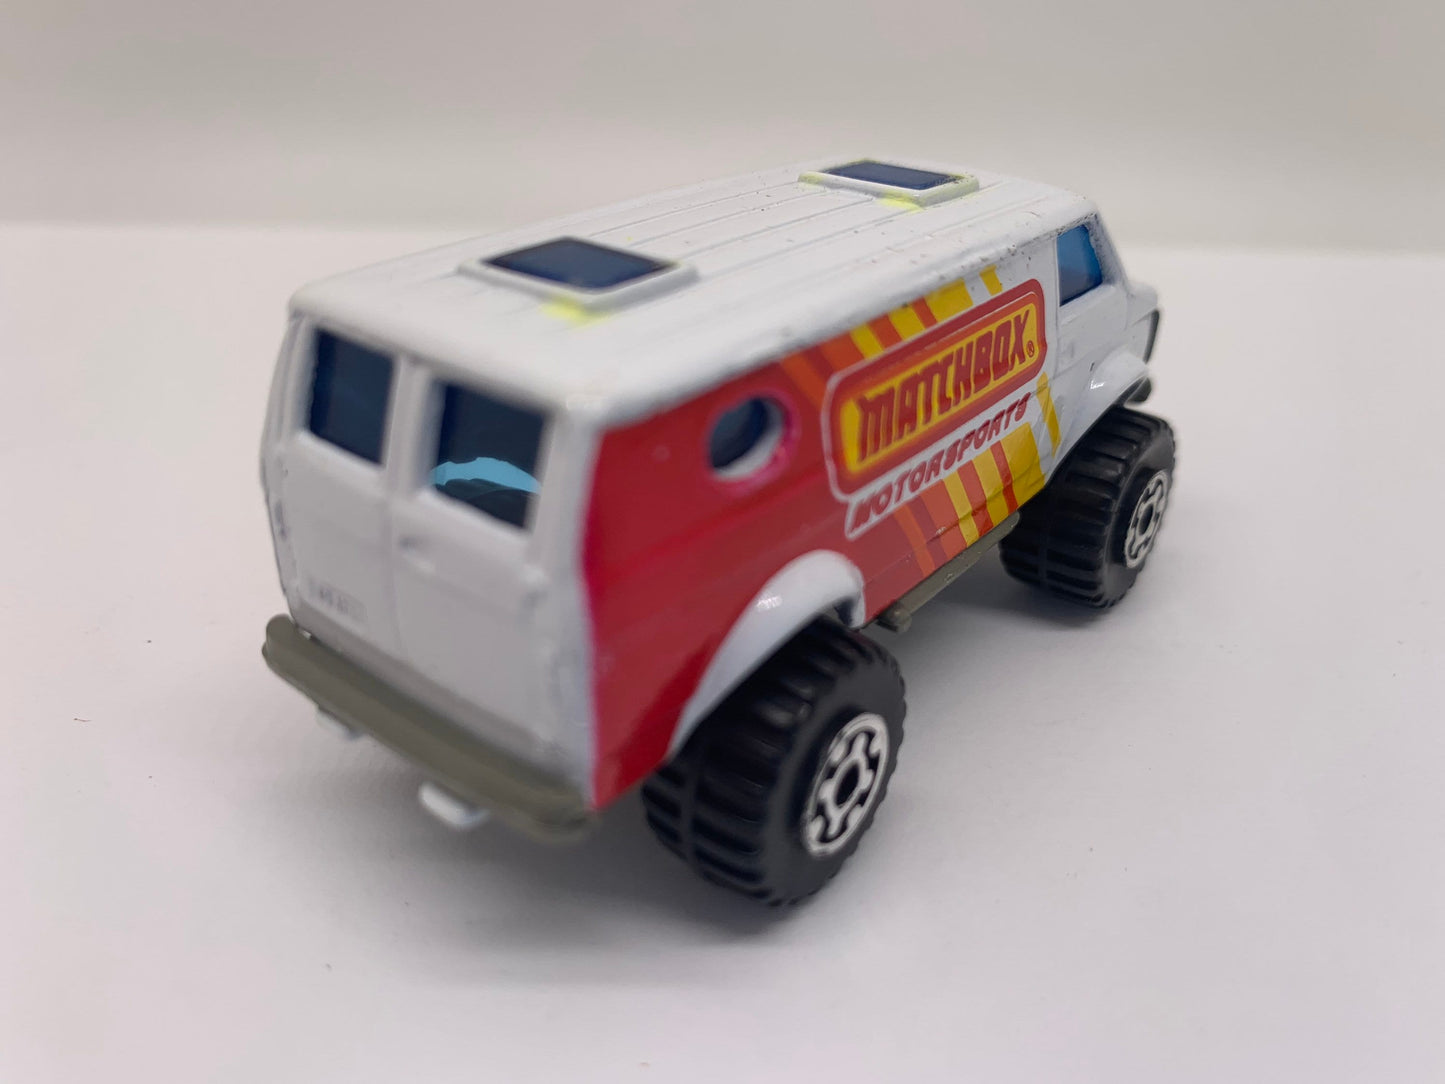 4x4 Chevy Van - Motorsports - Diecast Vintage - Diecast Collectible - Miniature Model Toy Car - Matchbox Car - Matchbox